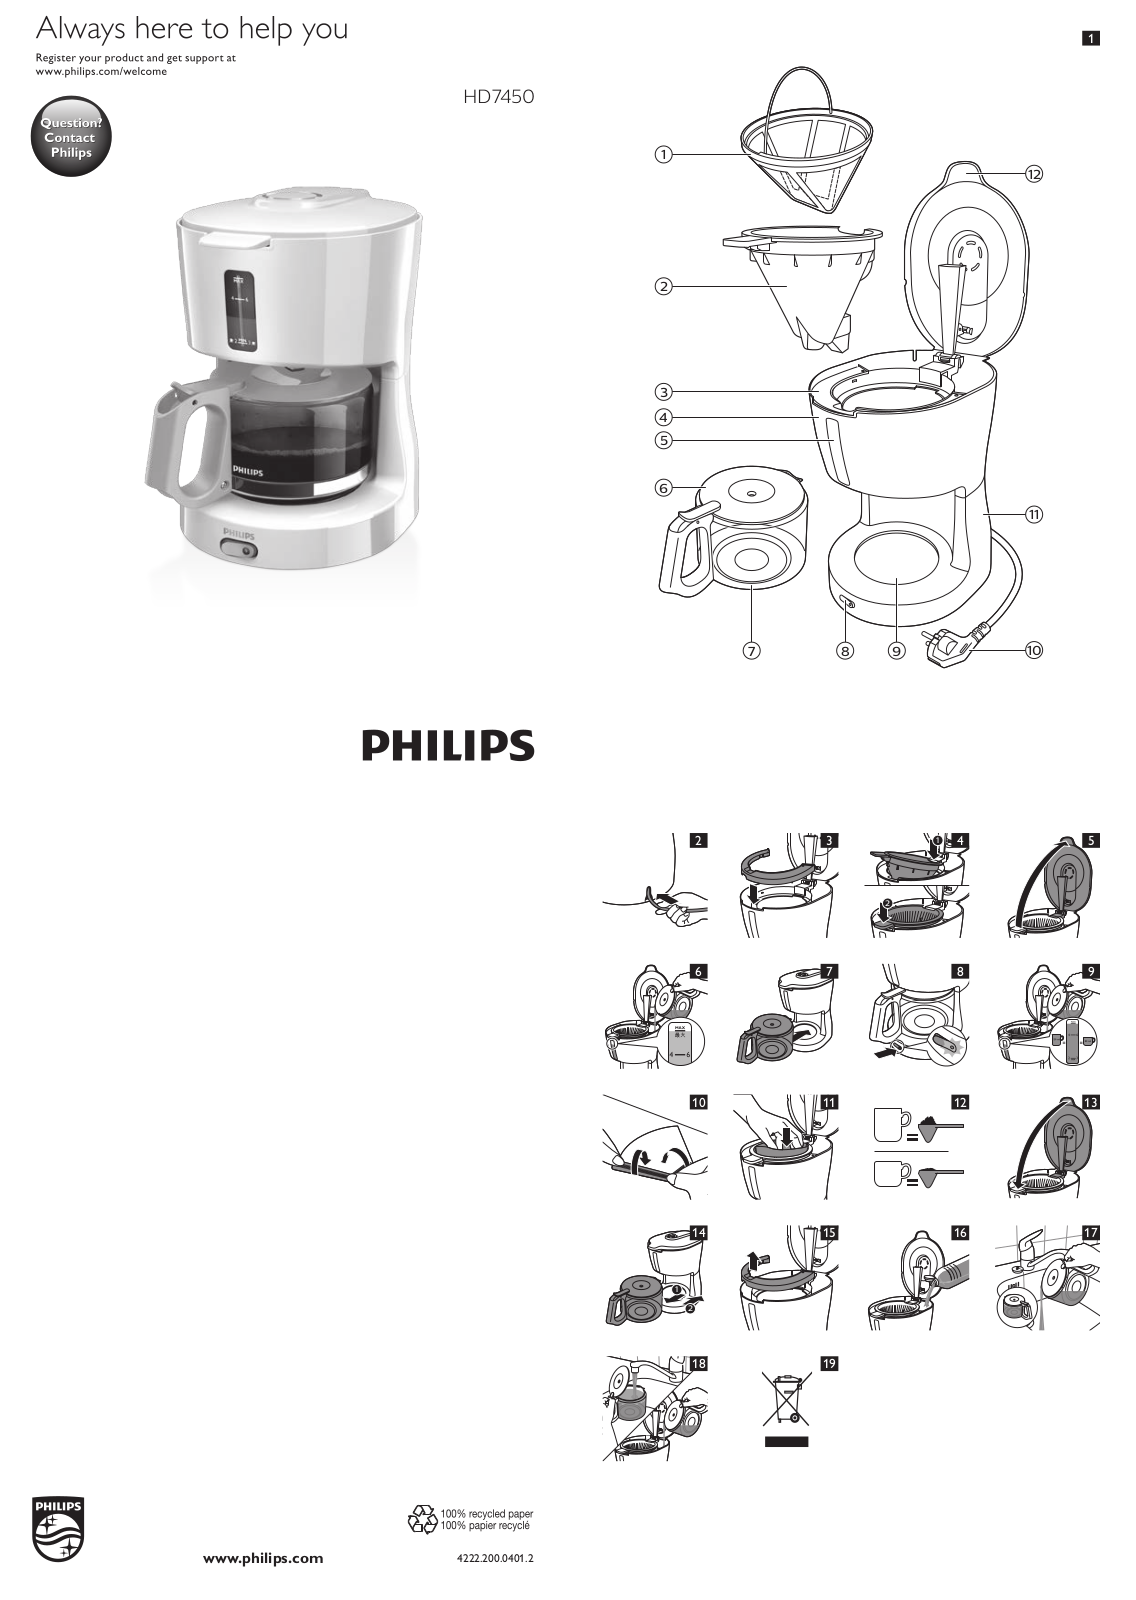 PHILIPS HD7450 User Manual